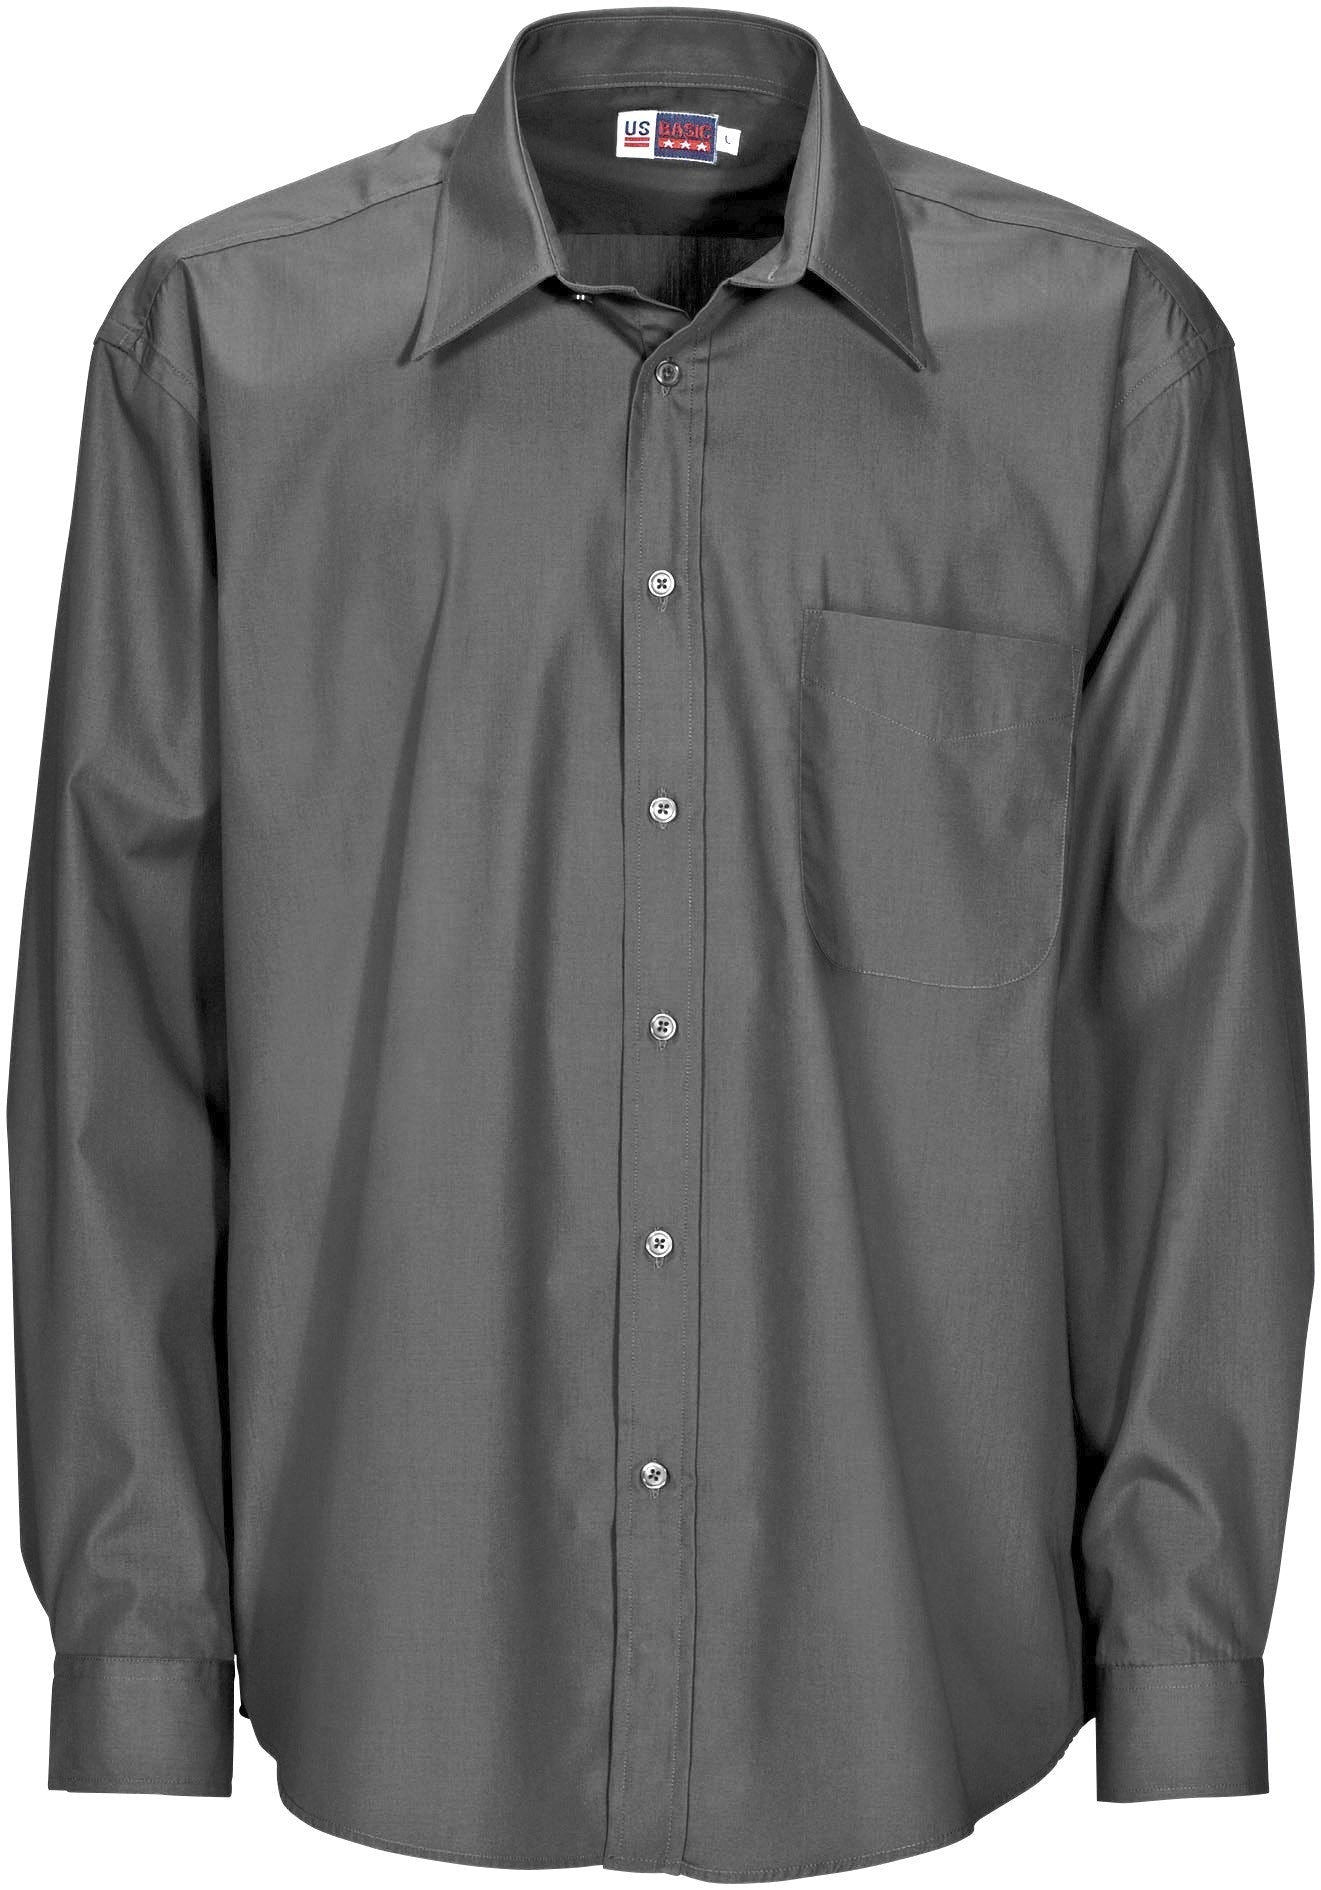 Mens Long Sleeve Washington Shirt - Black Only-2XL-Grey-GY